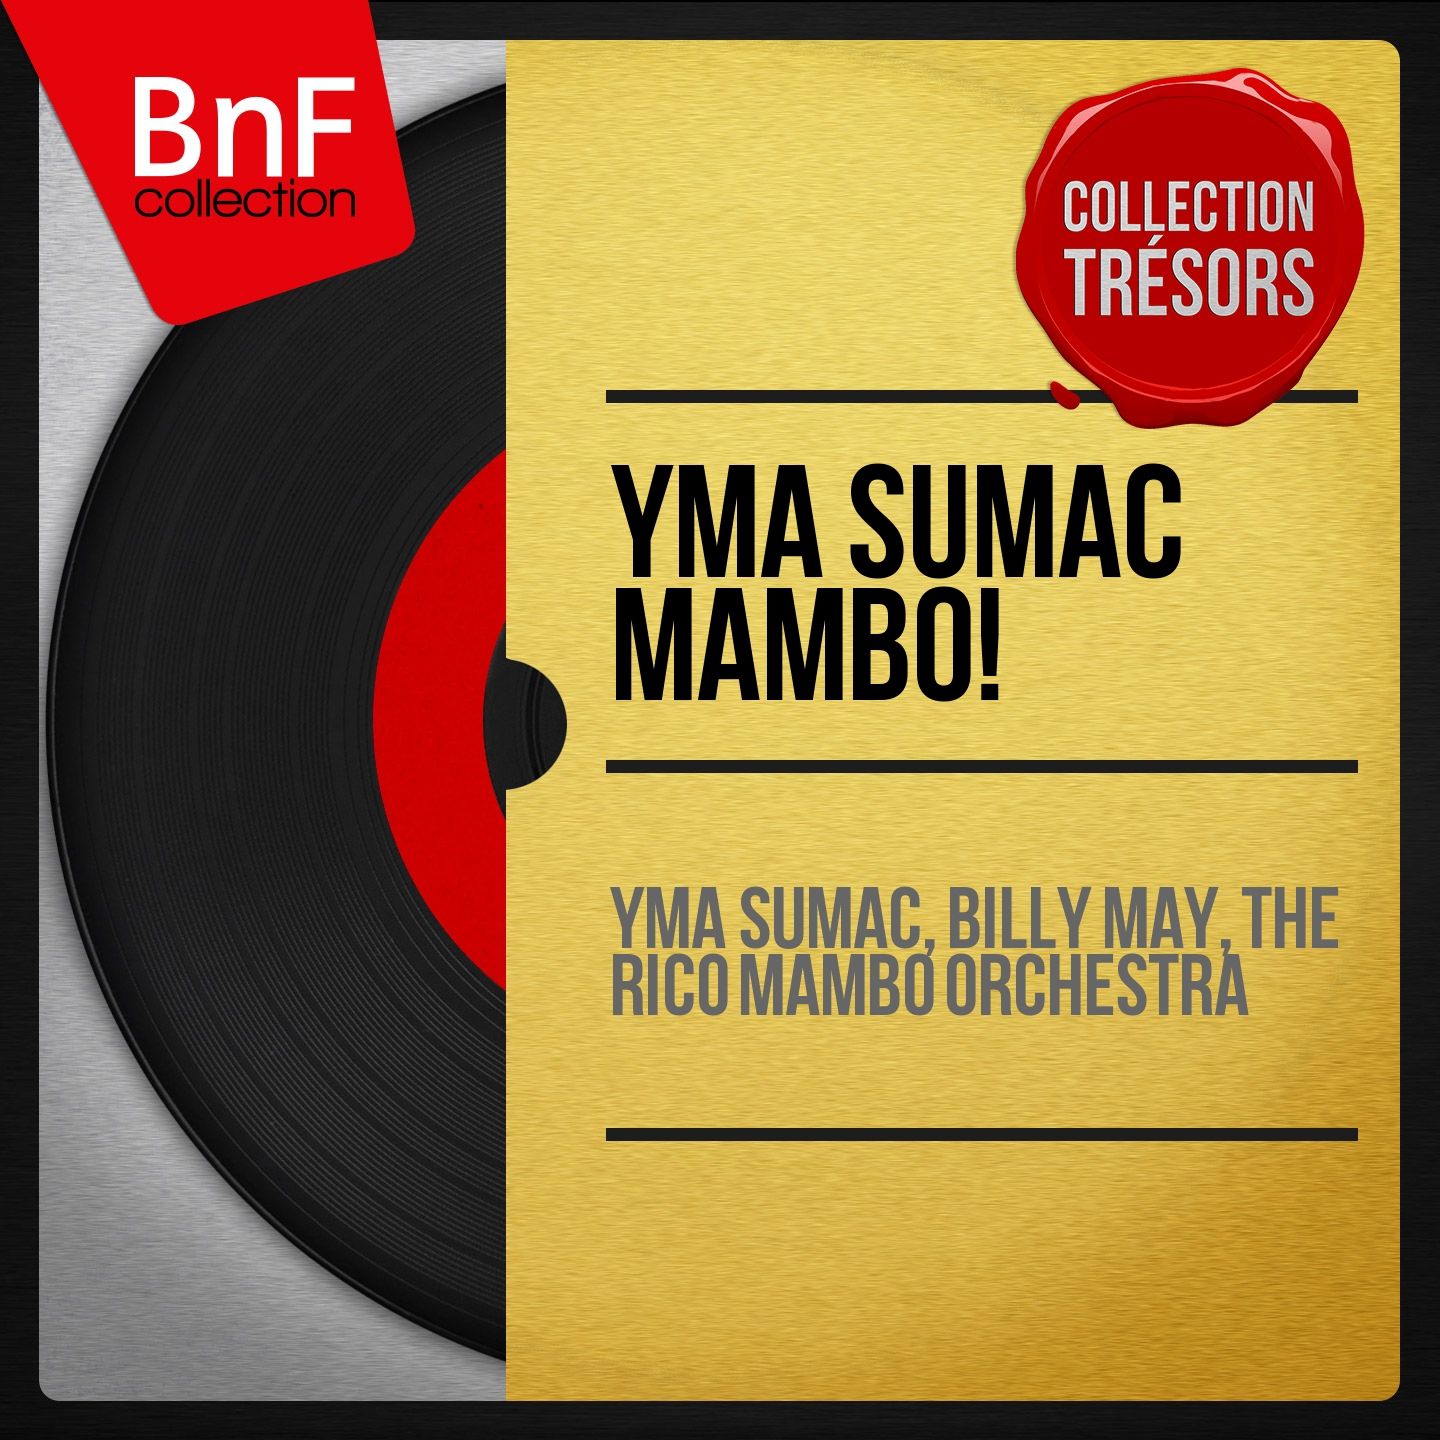 Yma Sumac, Billy May, The Rico Mambo Orchestra – Yma Sumac Mambo! (Mono Version) (1955/2014) [FLAC 24bit/96kHz]